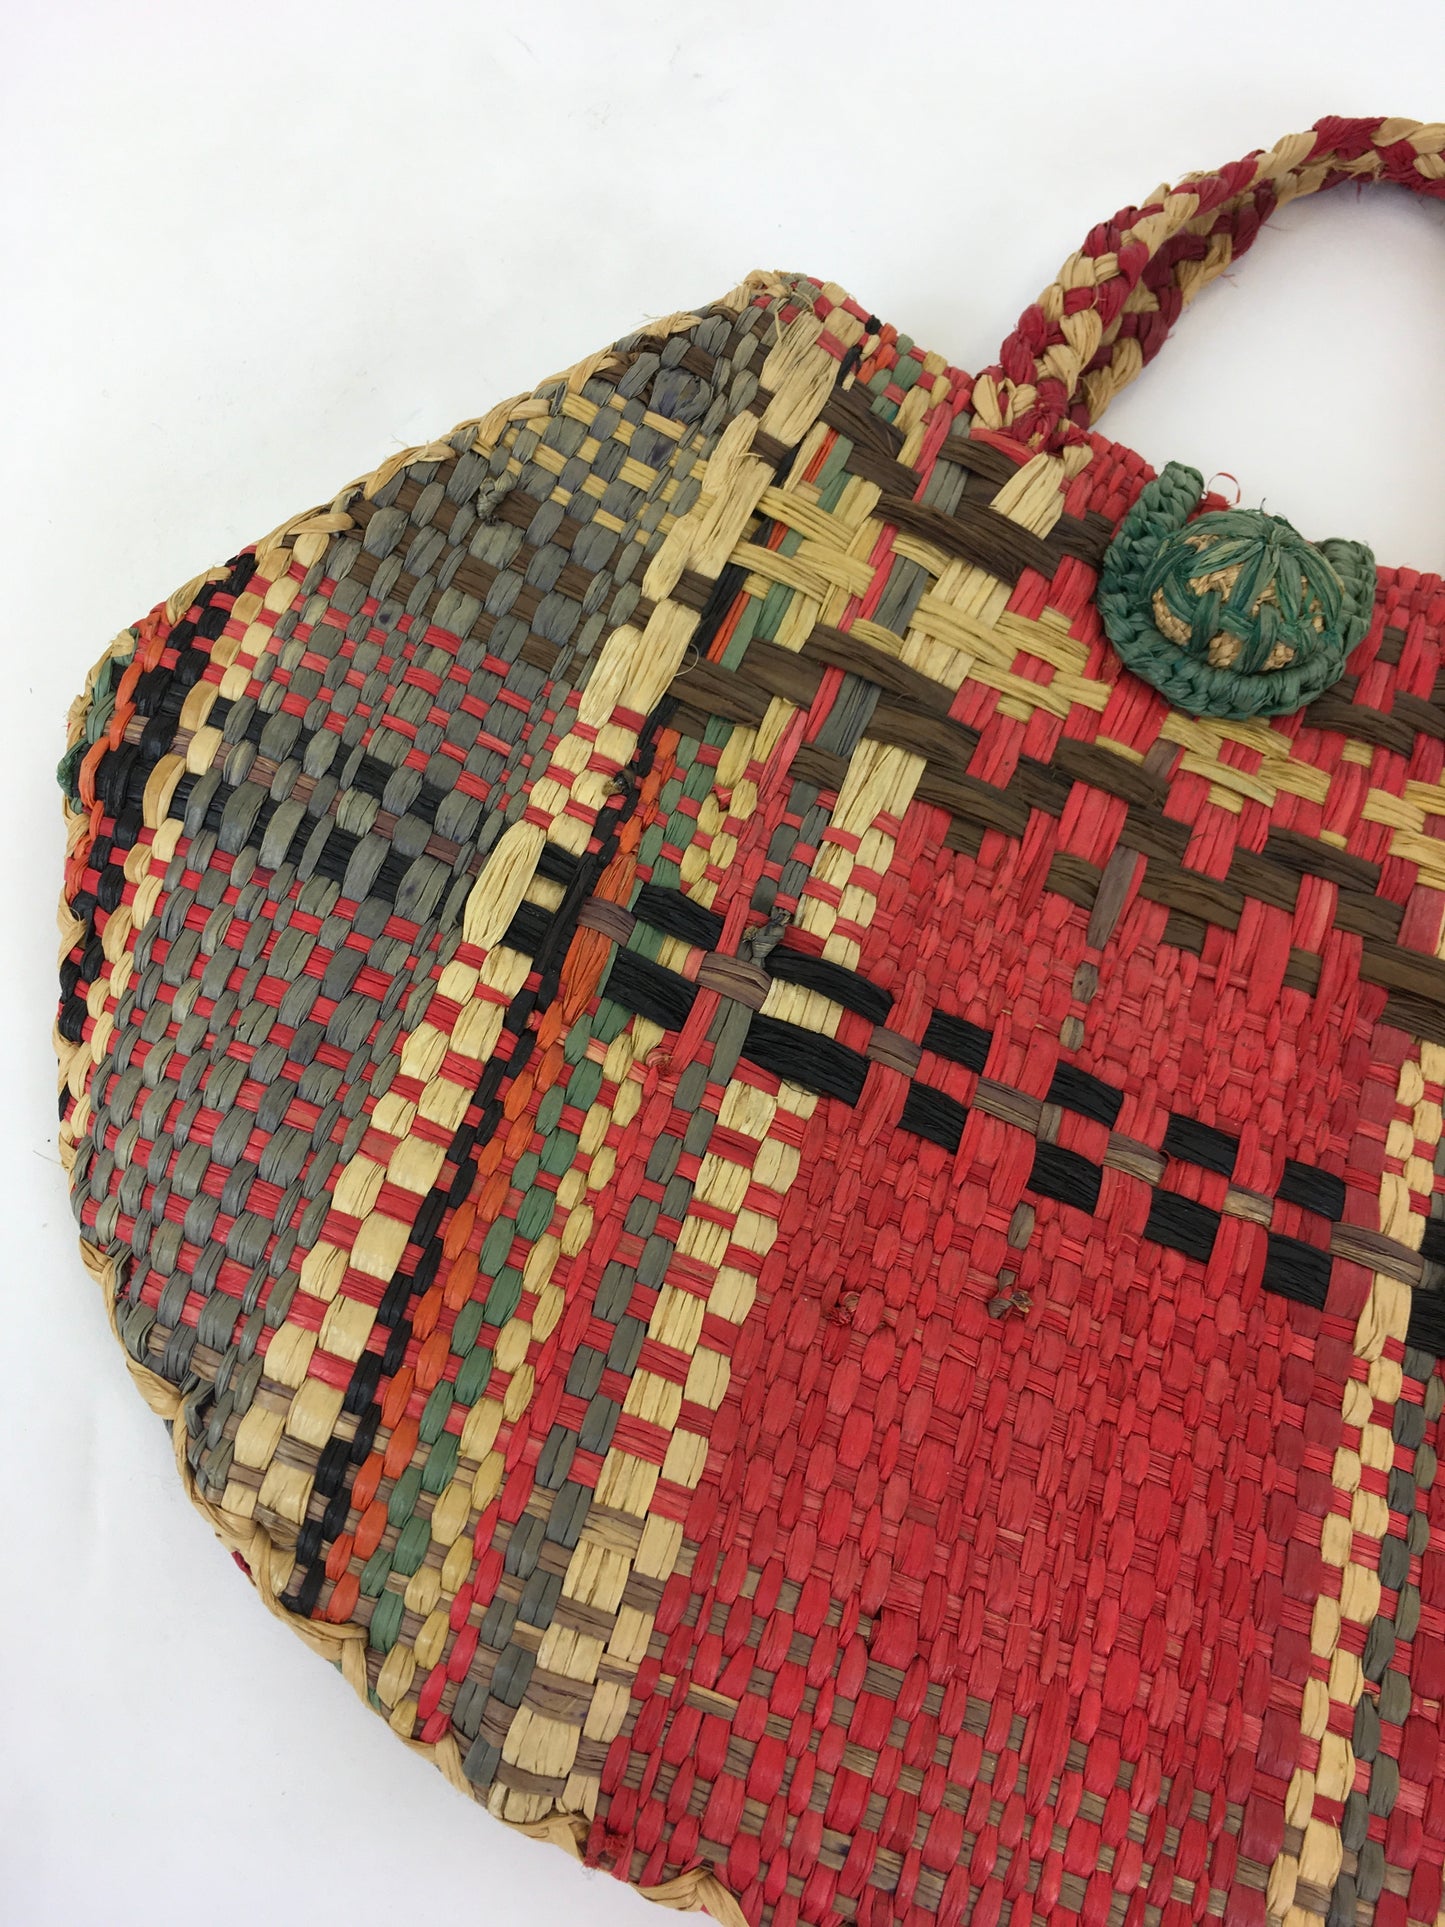 Original 1930’s/ 1940’s Raffia Straw Handbag - In Multicoloured Tones